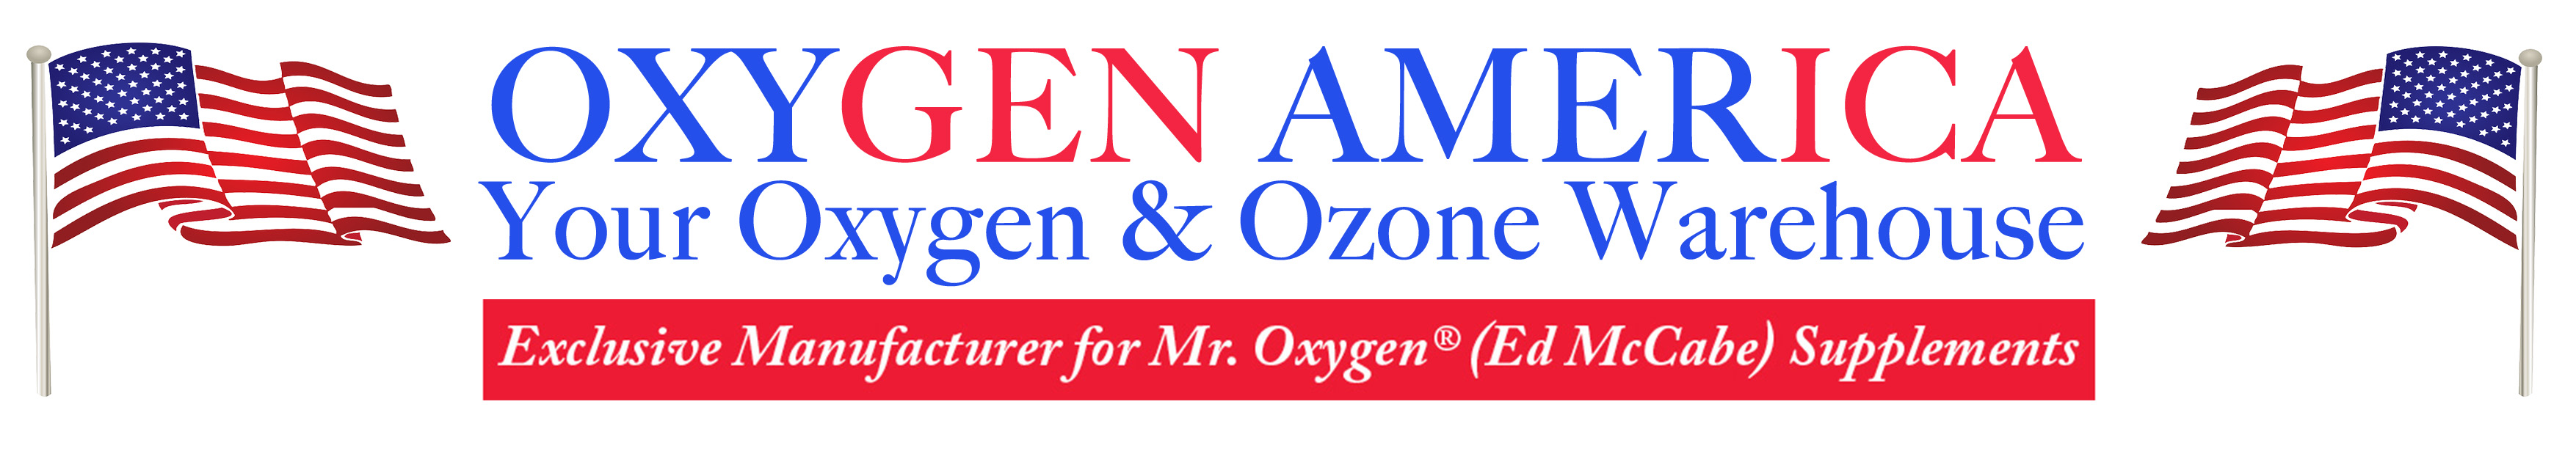 Oxygen America